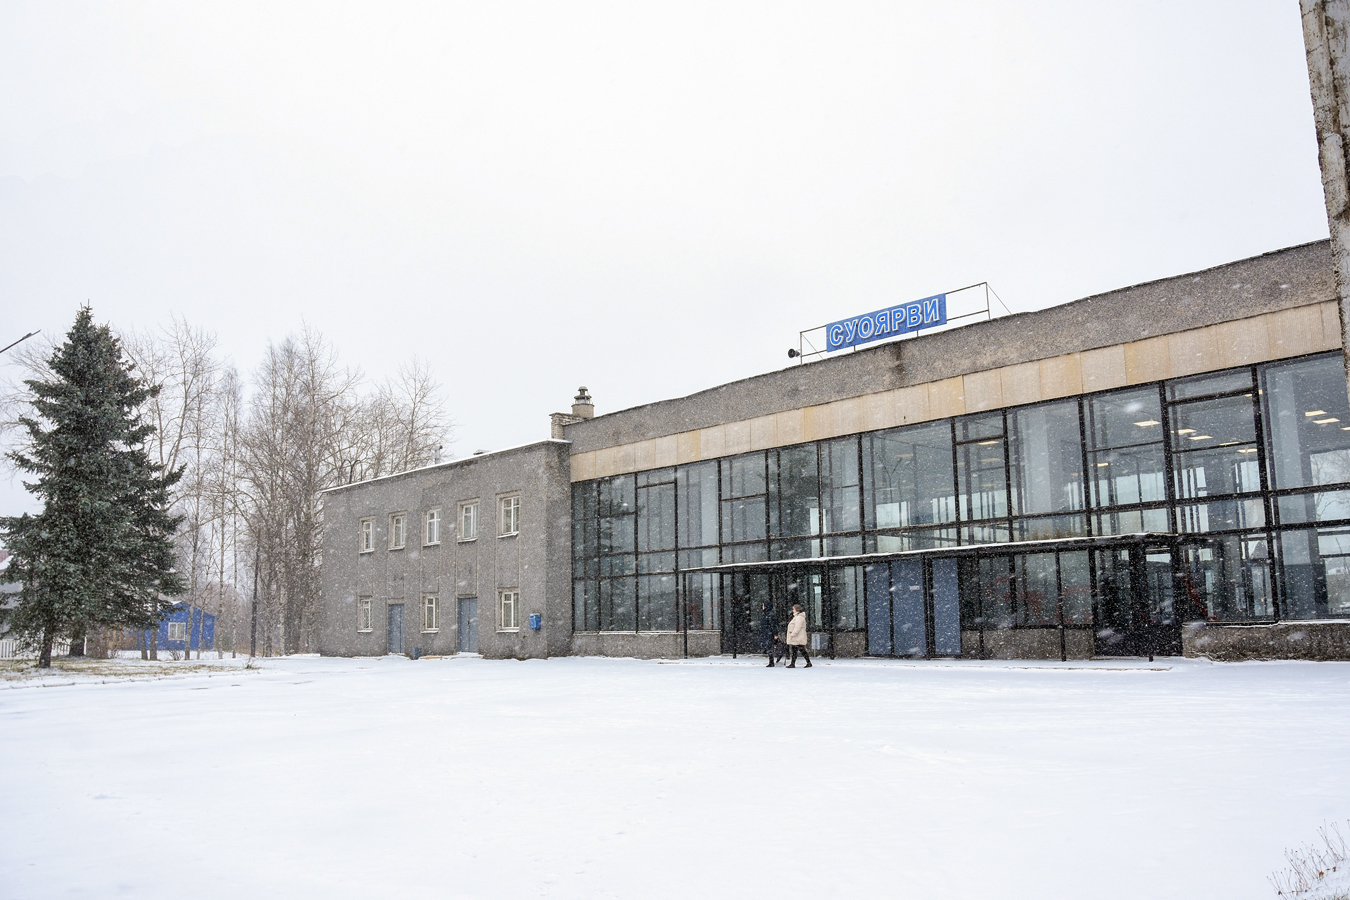 November 3, 2019. Suojärvi. Railway station